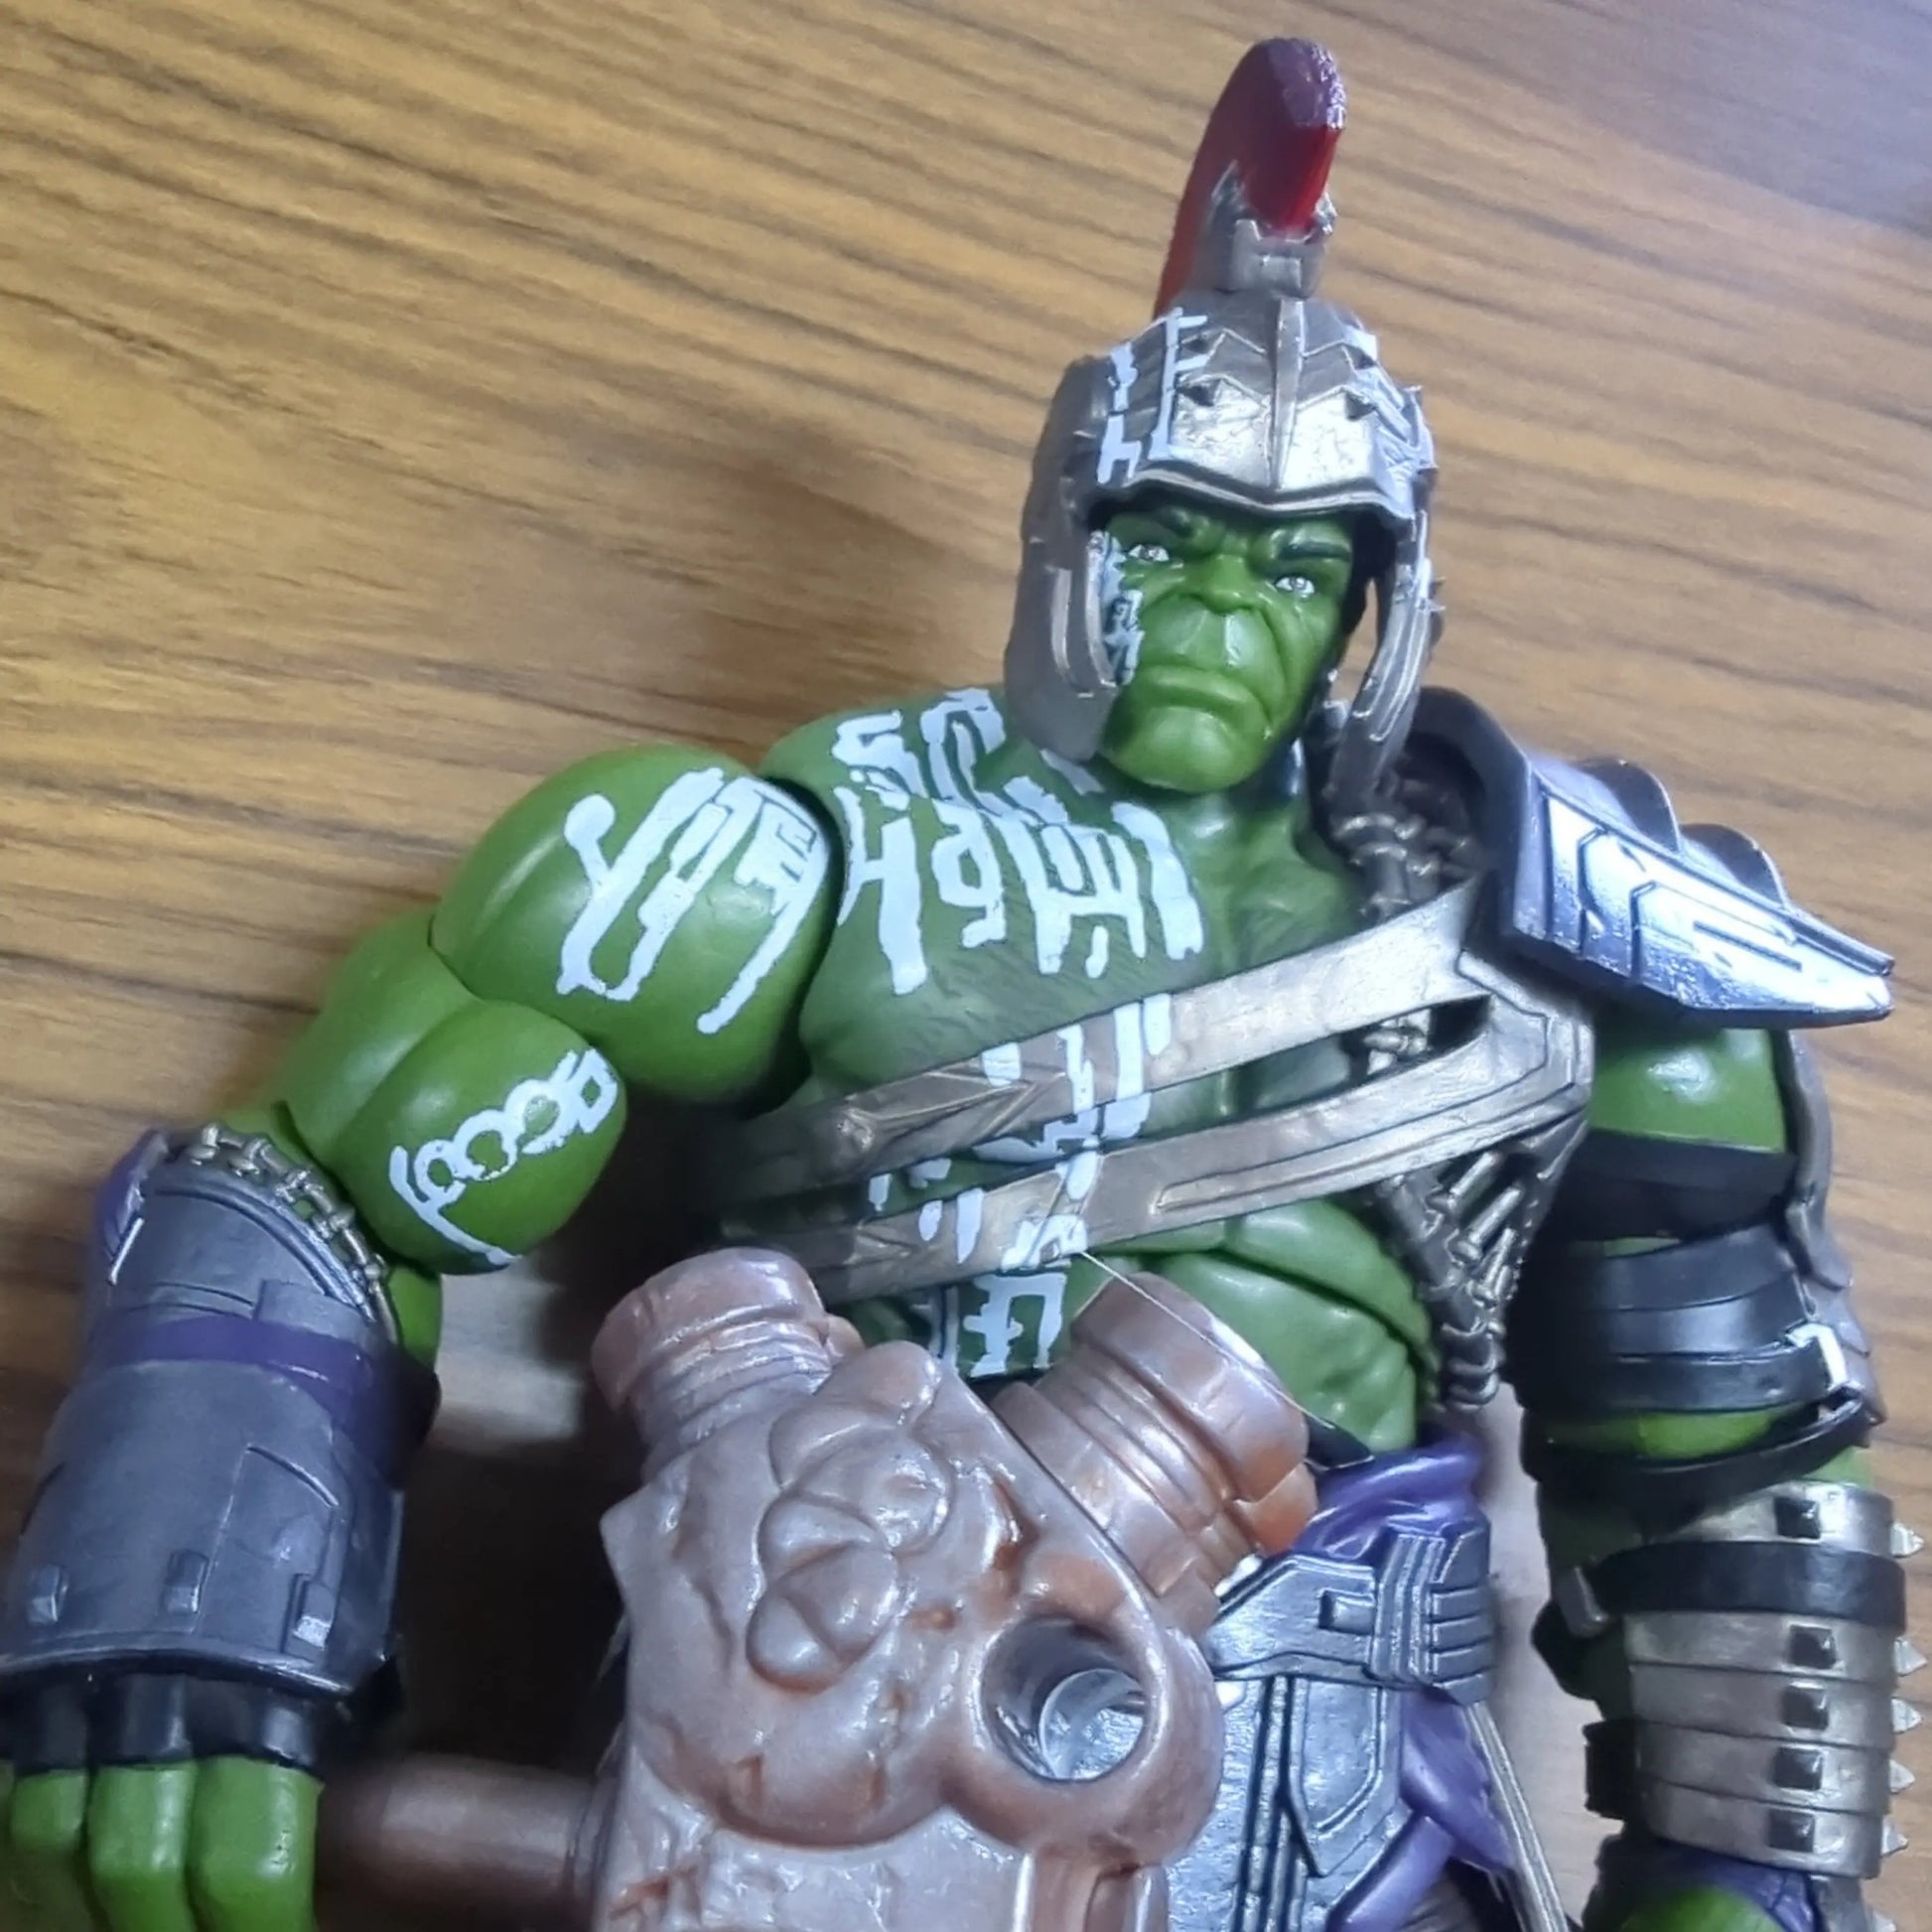 Marvel Legends Thor Ragnarok Build A Figure Gladiator Hulk FRENLY BRICKS - Open 7 Days